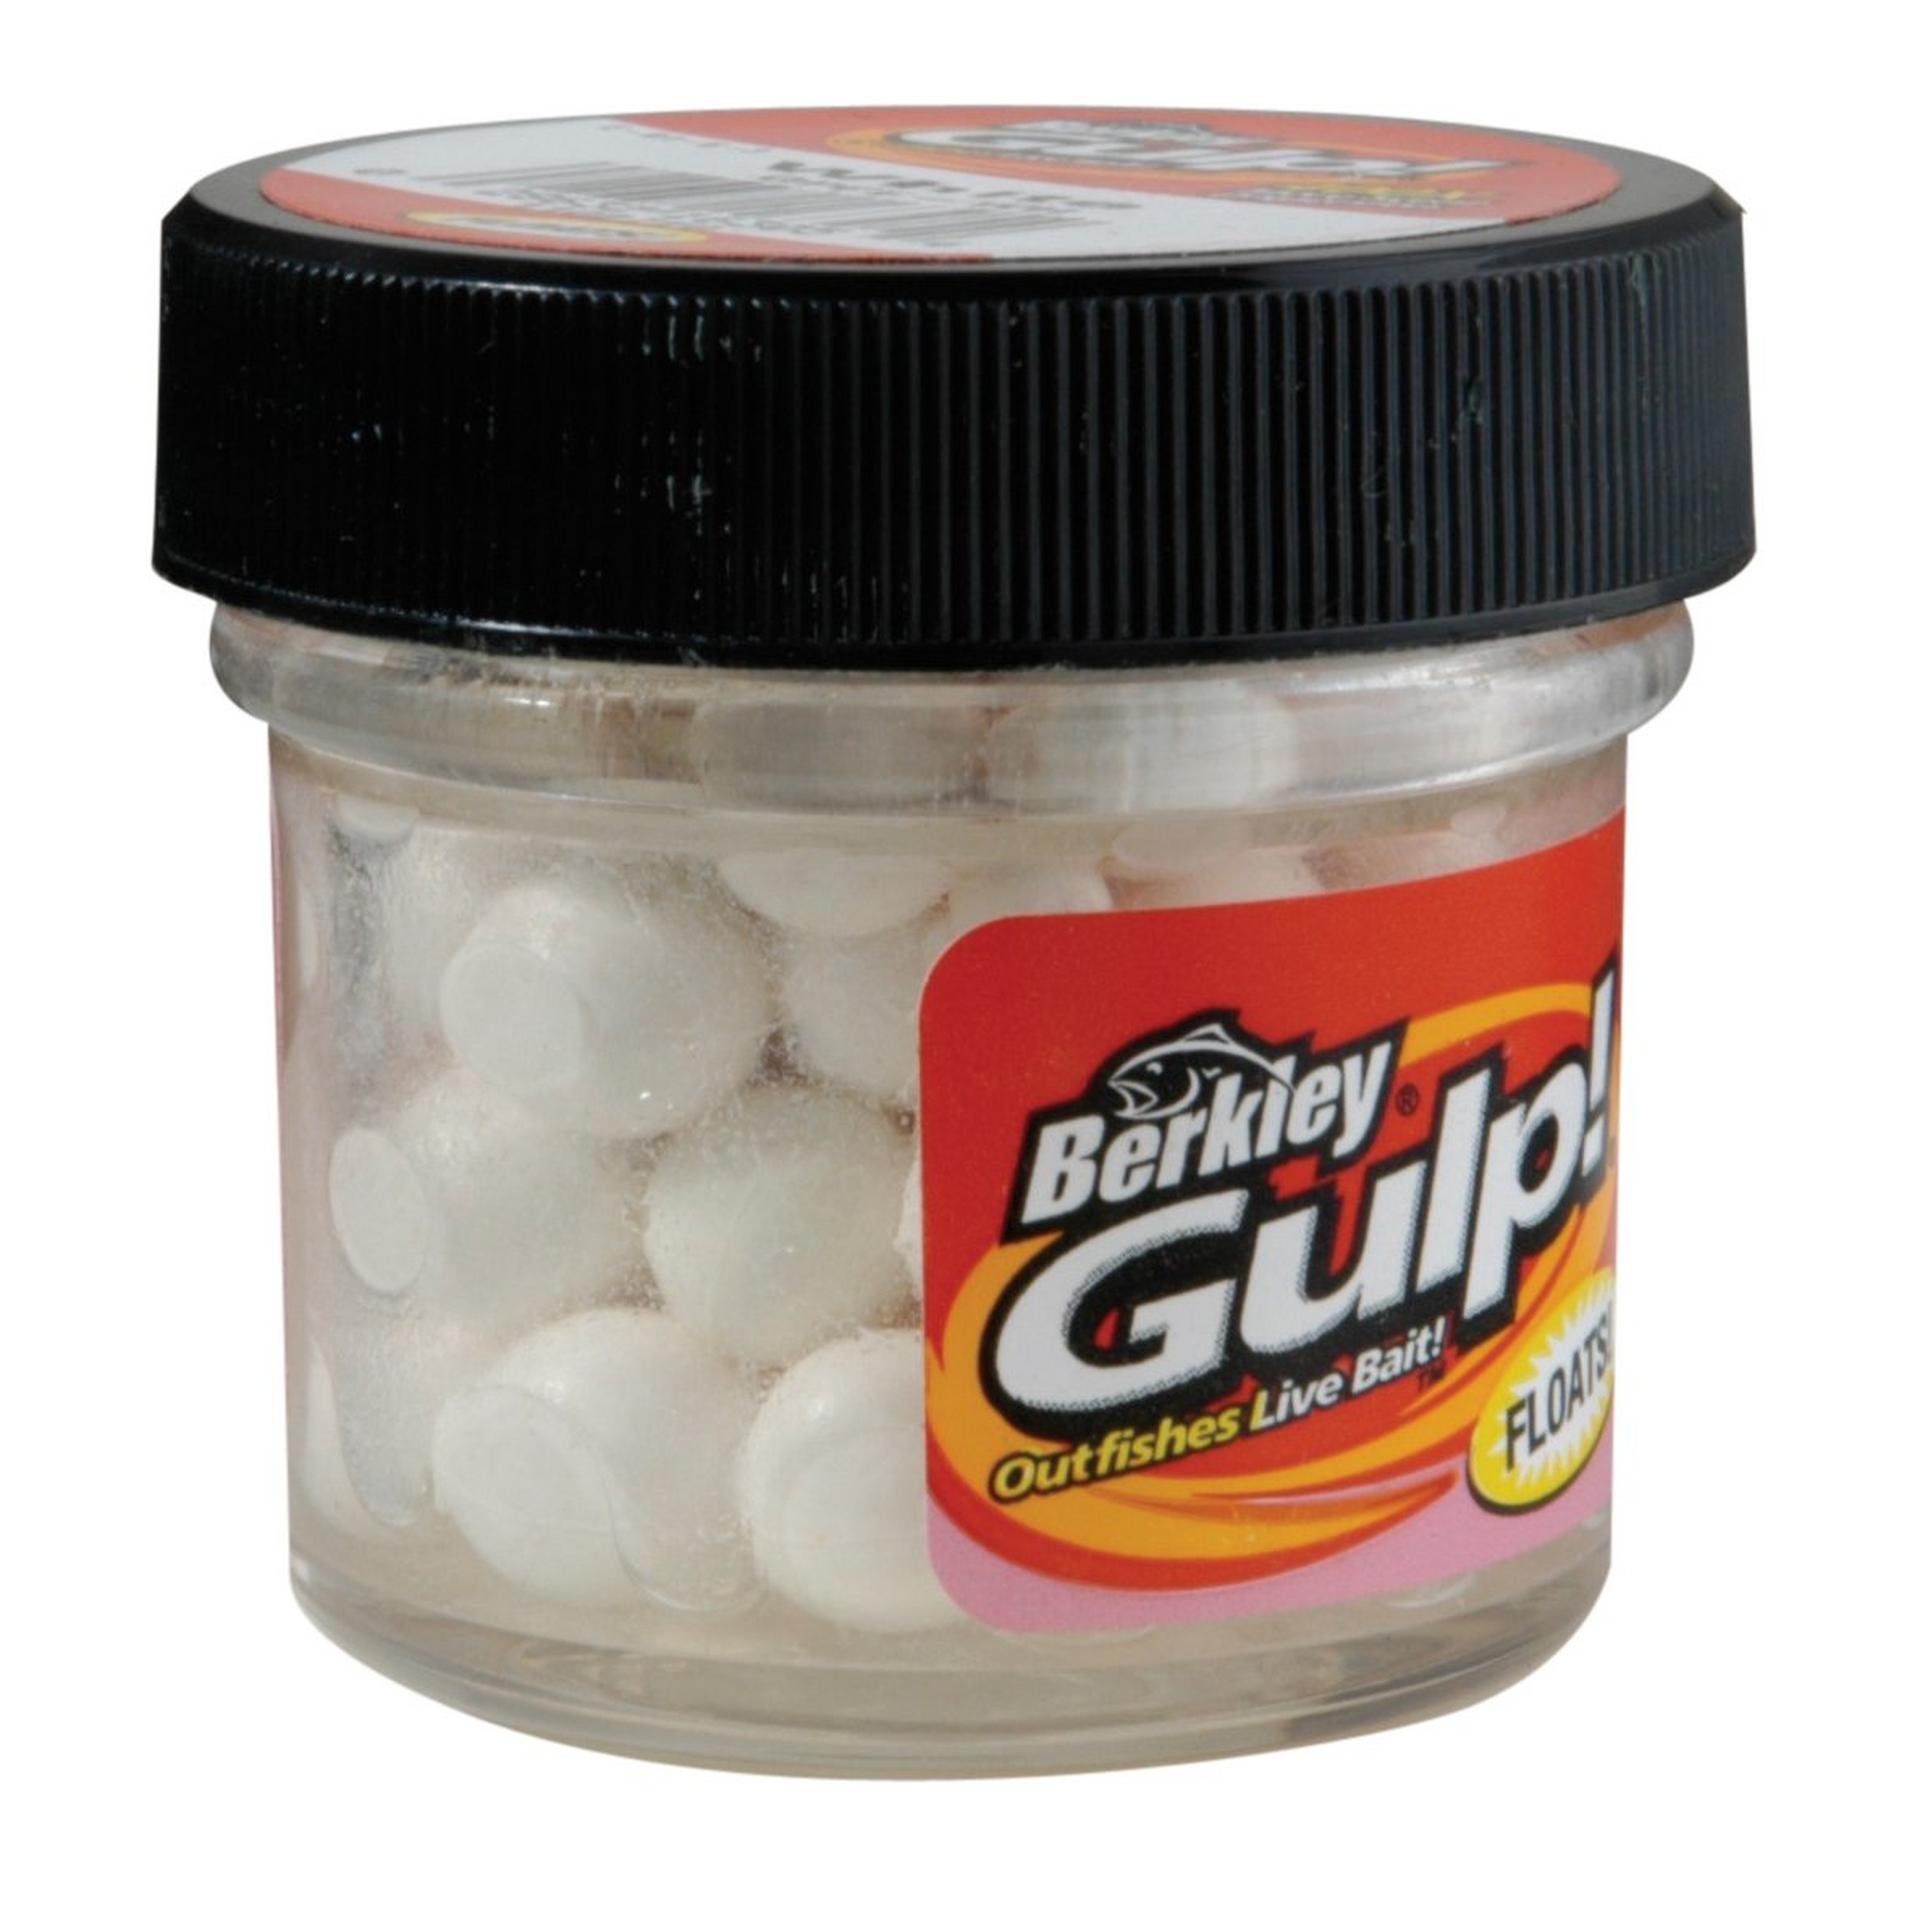 Gulp!® Floating Salmon Eggs